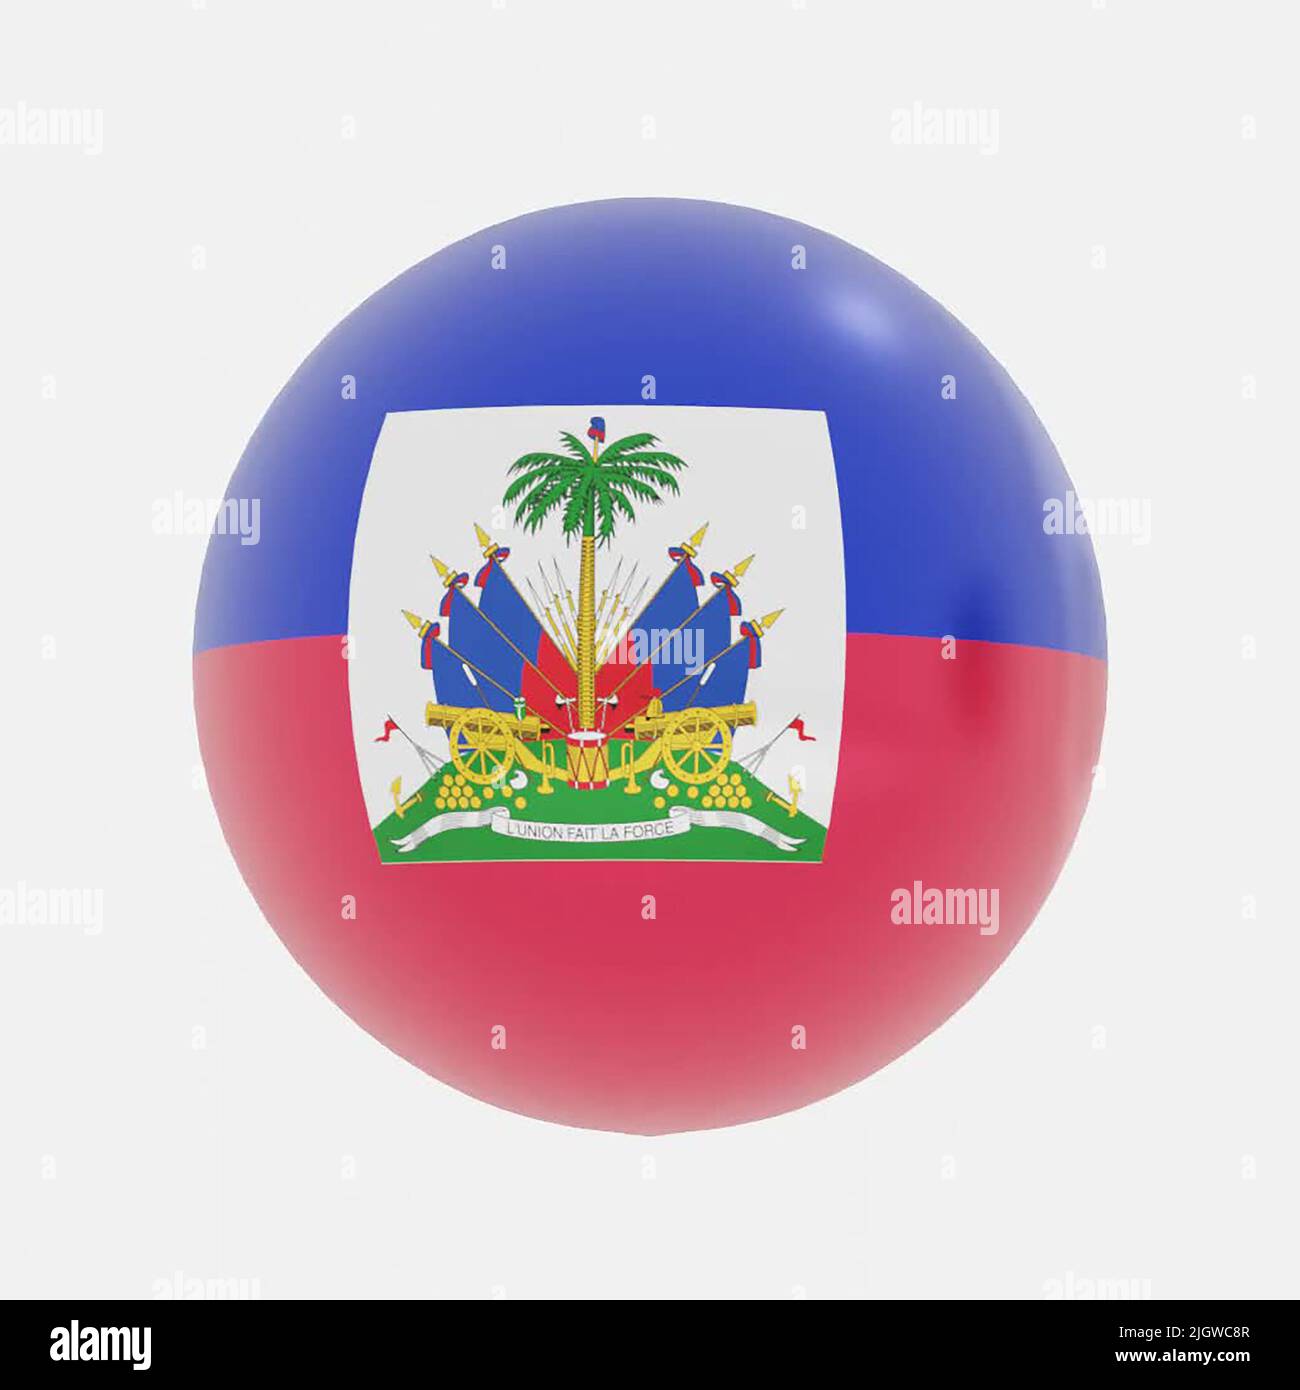 3d render of globe in Haiti flag for icon or symbol. Stock Photo